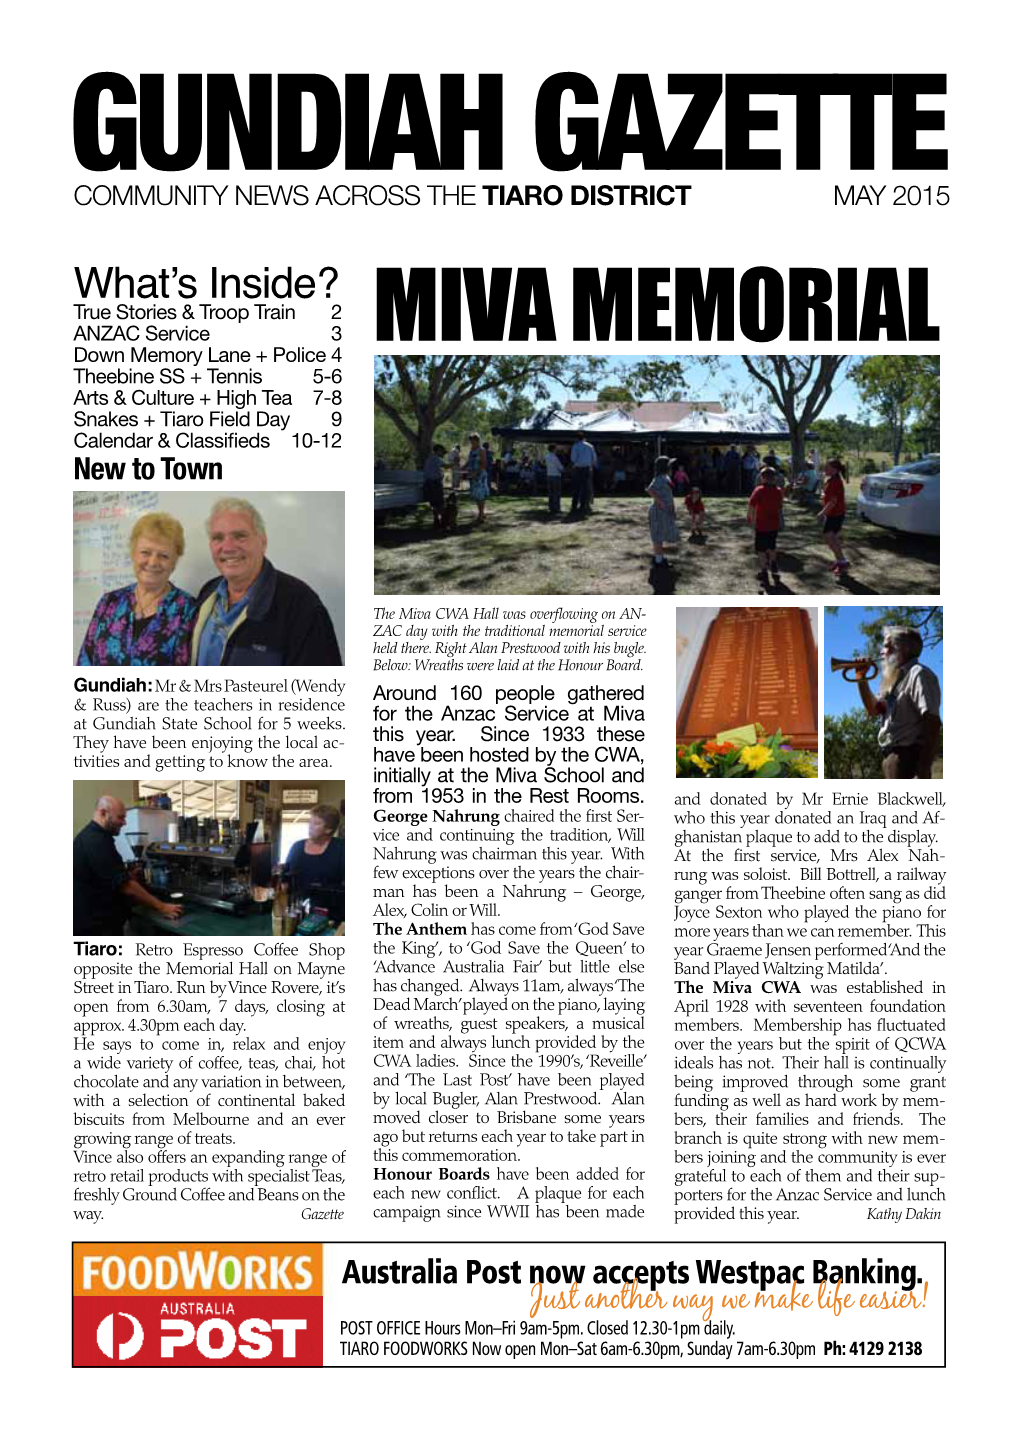 MIVA Memorial Theebine SS + Tennis 5-6 Arts & Culture + High Tea 7-8 Snakes + Tiaro Field Day 9 Calendar & Classifieds 10-12 New to Town